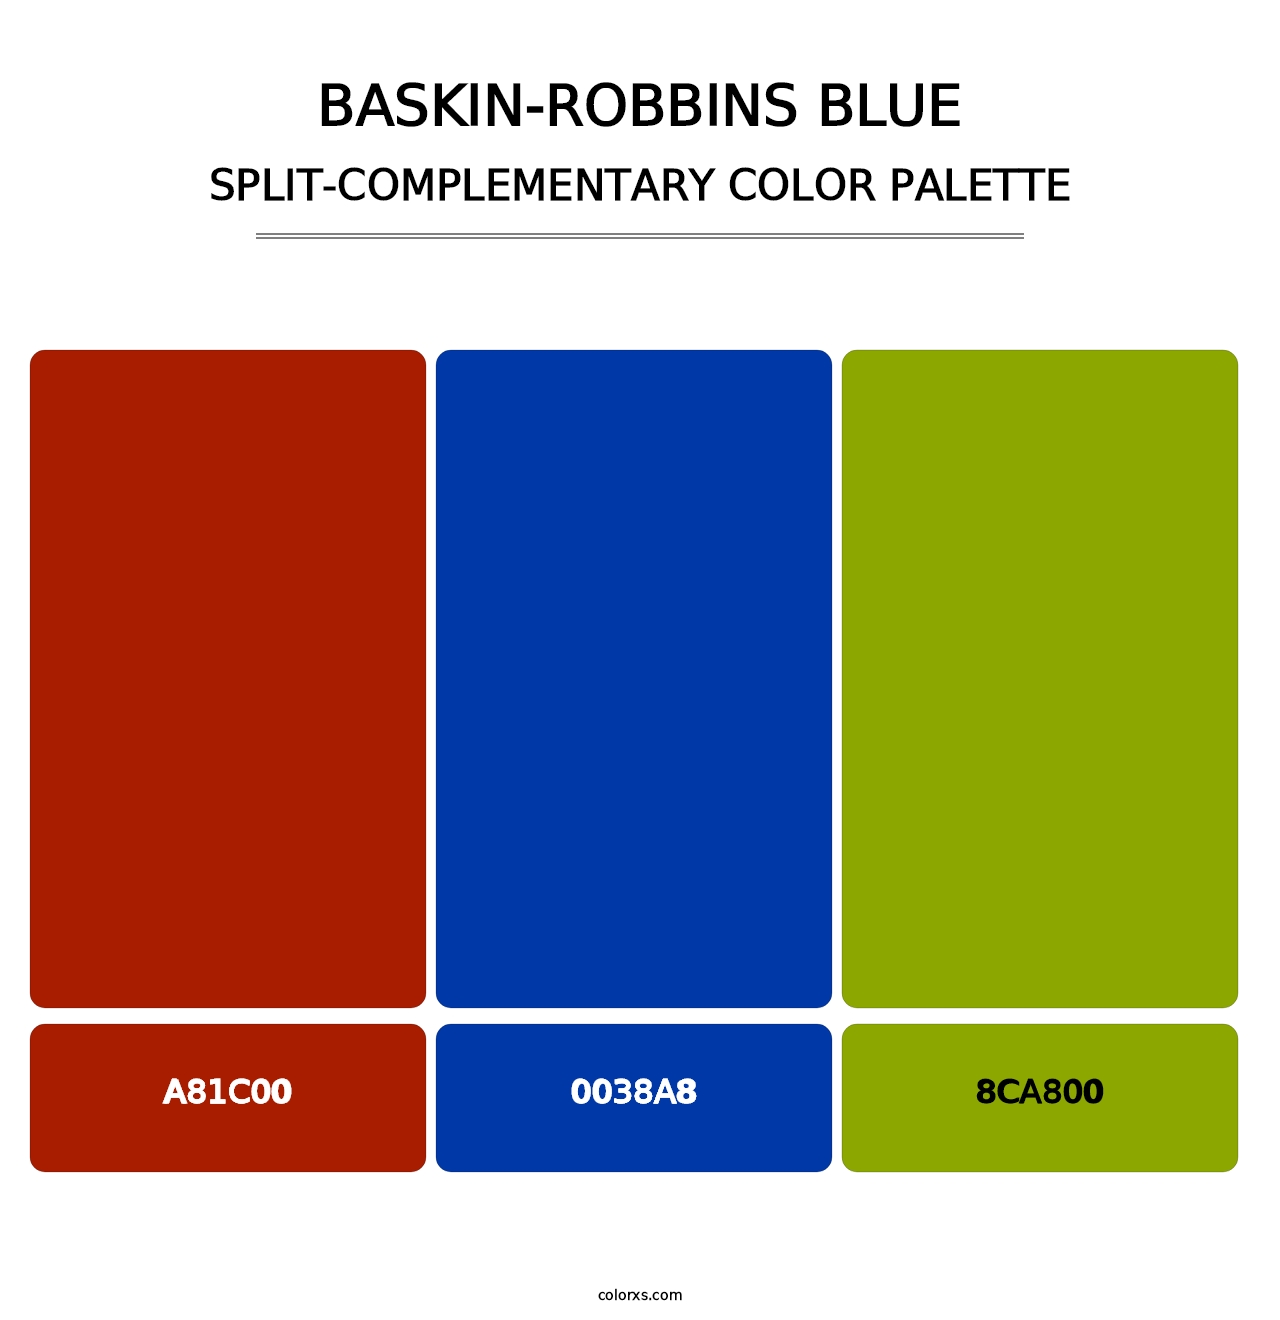 Baskin-Robbins Blue - Split-Complementary Color Palette